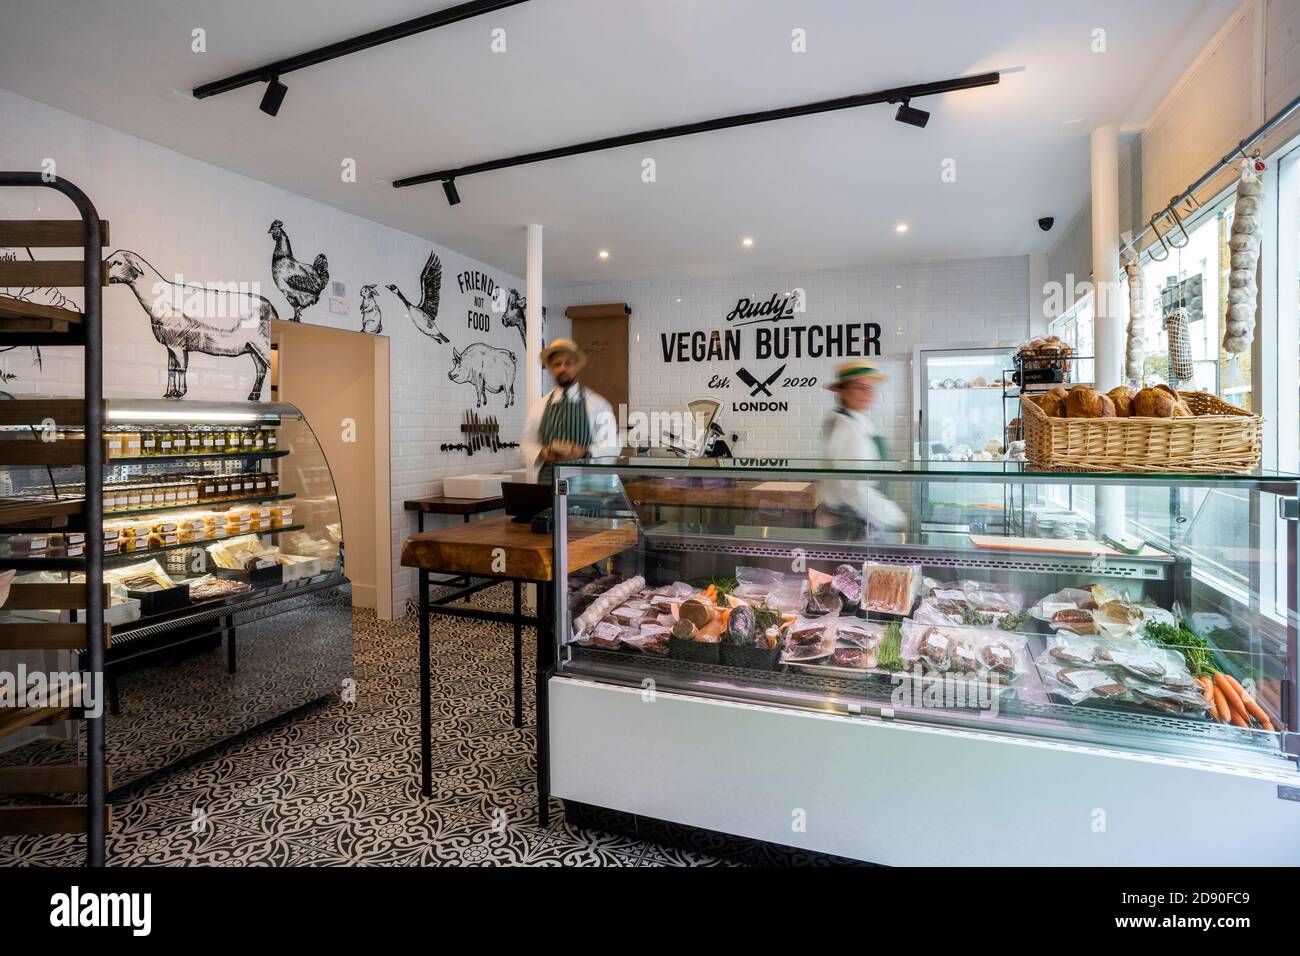 Das Personal des Rudys Vegan Butcher Delikatessengeschäfts wird in Islington London eröffnet. Stockfoto